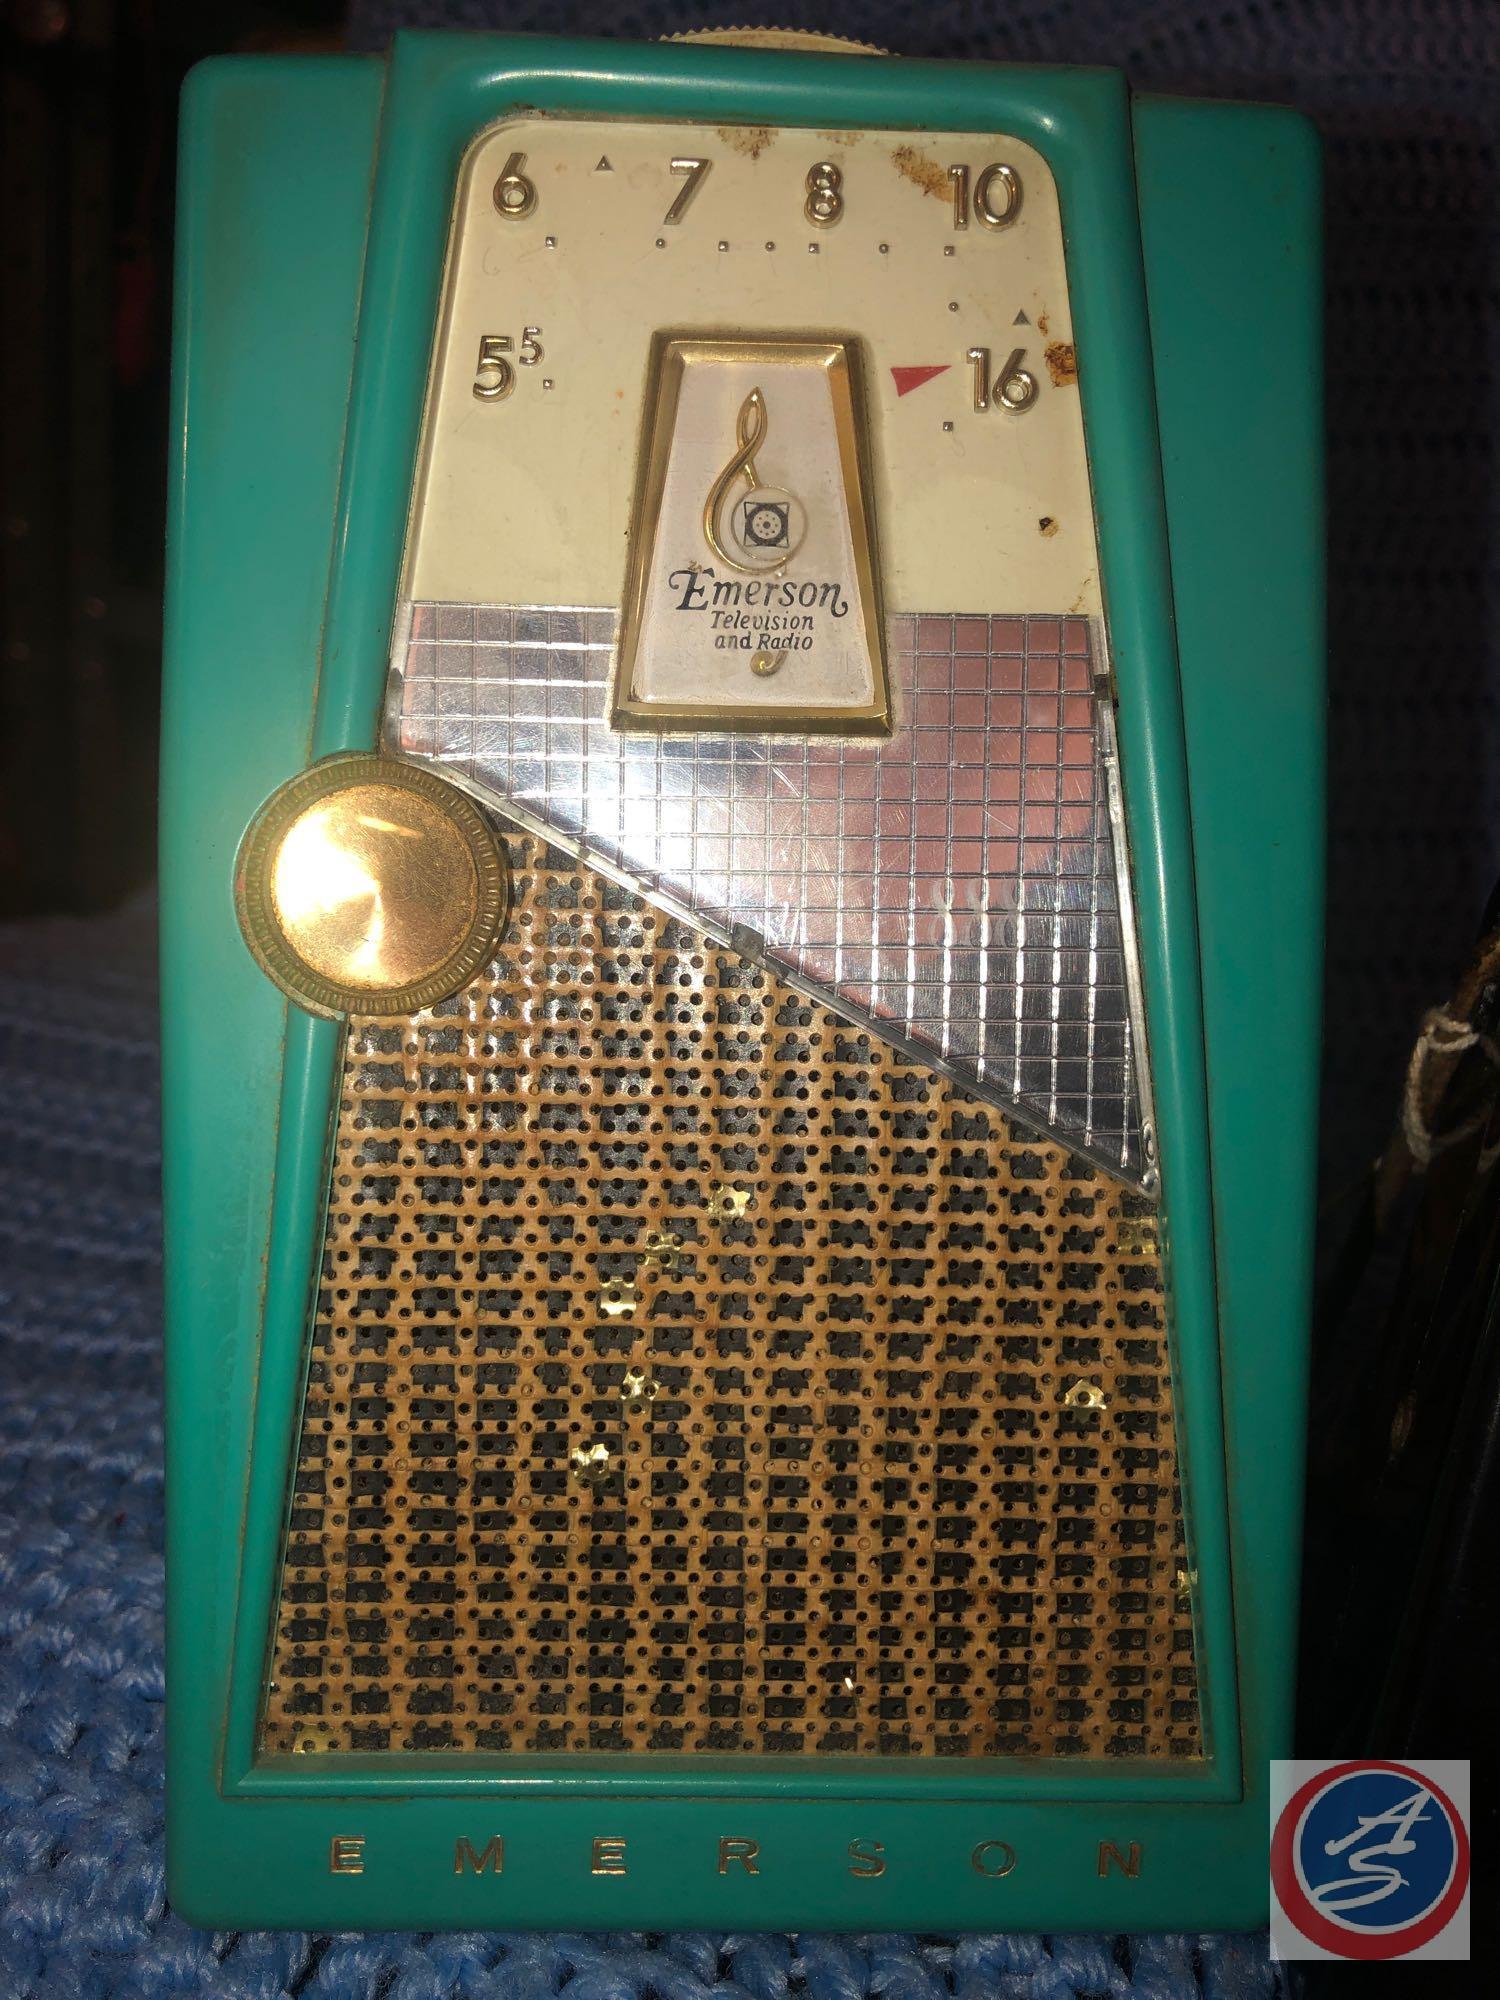 Emerson Model No. 888 Explorer Nevabreak Pocket Transistor Radio, Emerson Model No. 888 Nevabreak 8